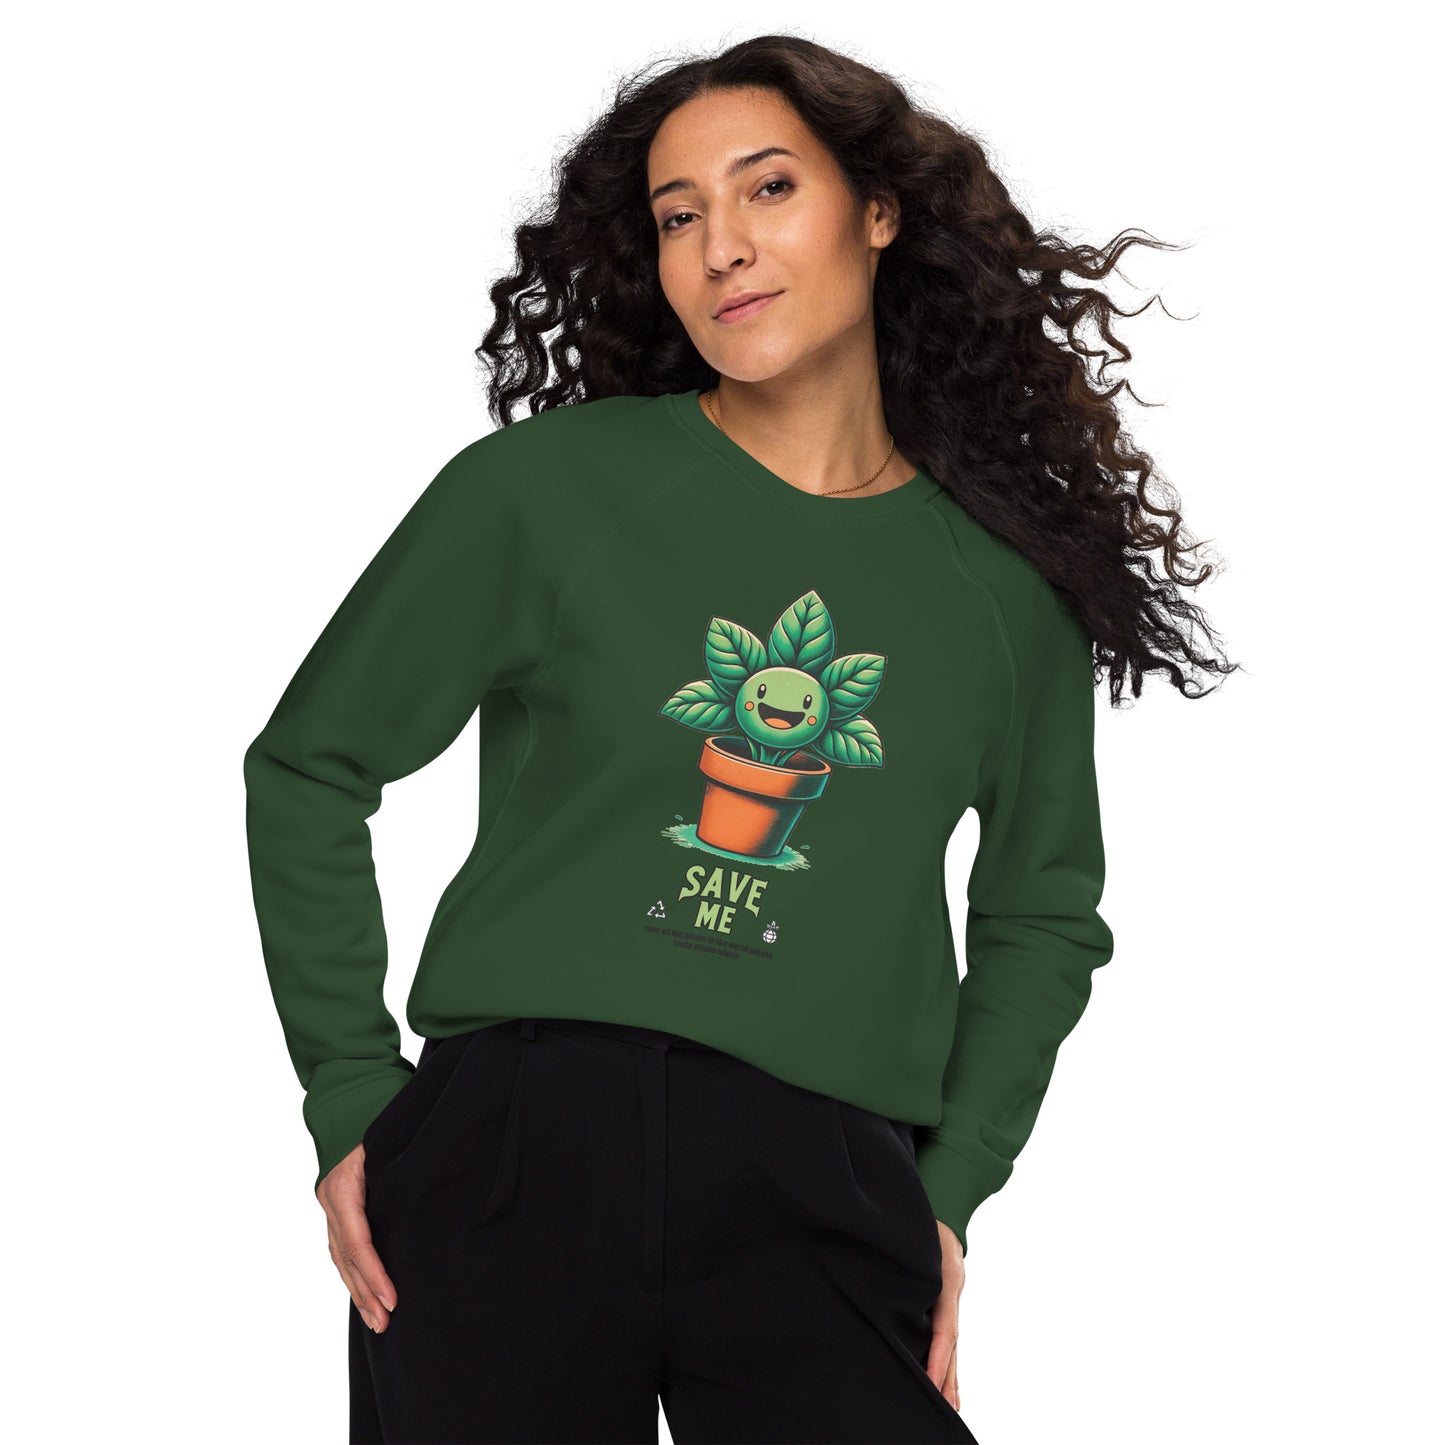 Organic Raglan Sweatshirt with Save Me Plant Symbol